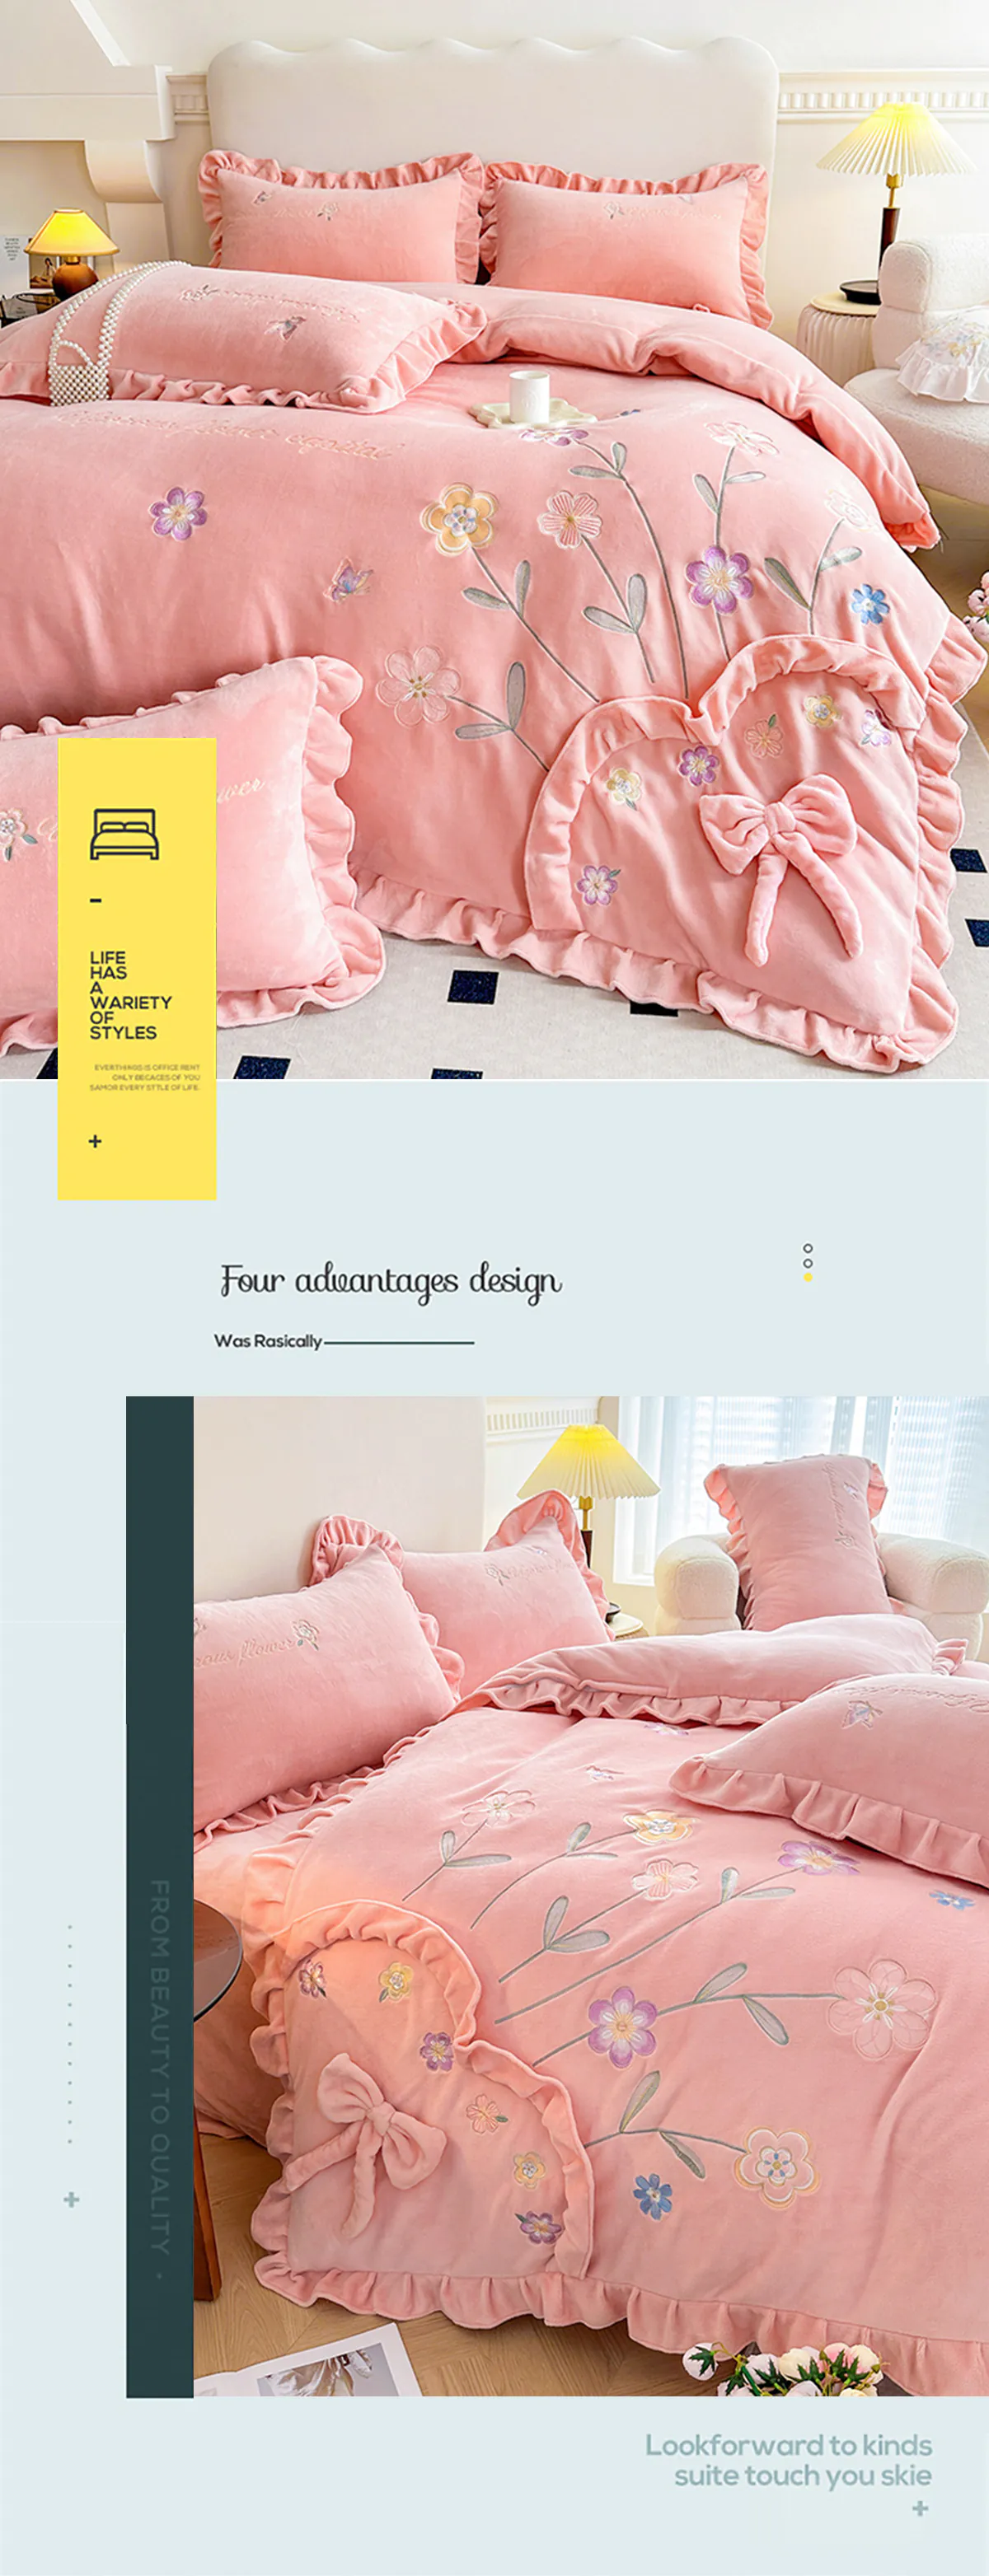 Romantic-Milk-Fiber-Comforter-Cover-Bed-Sheet-Pillowcases-4-Pcs-Set17